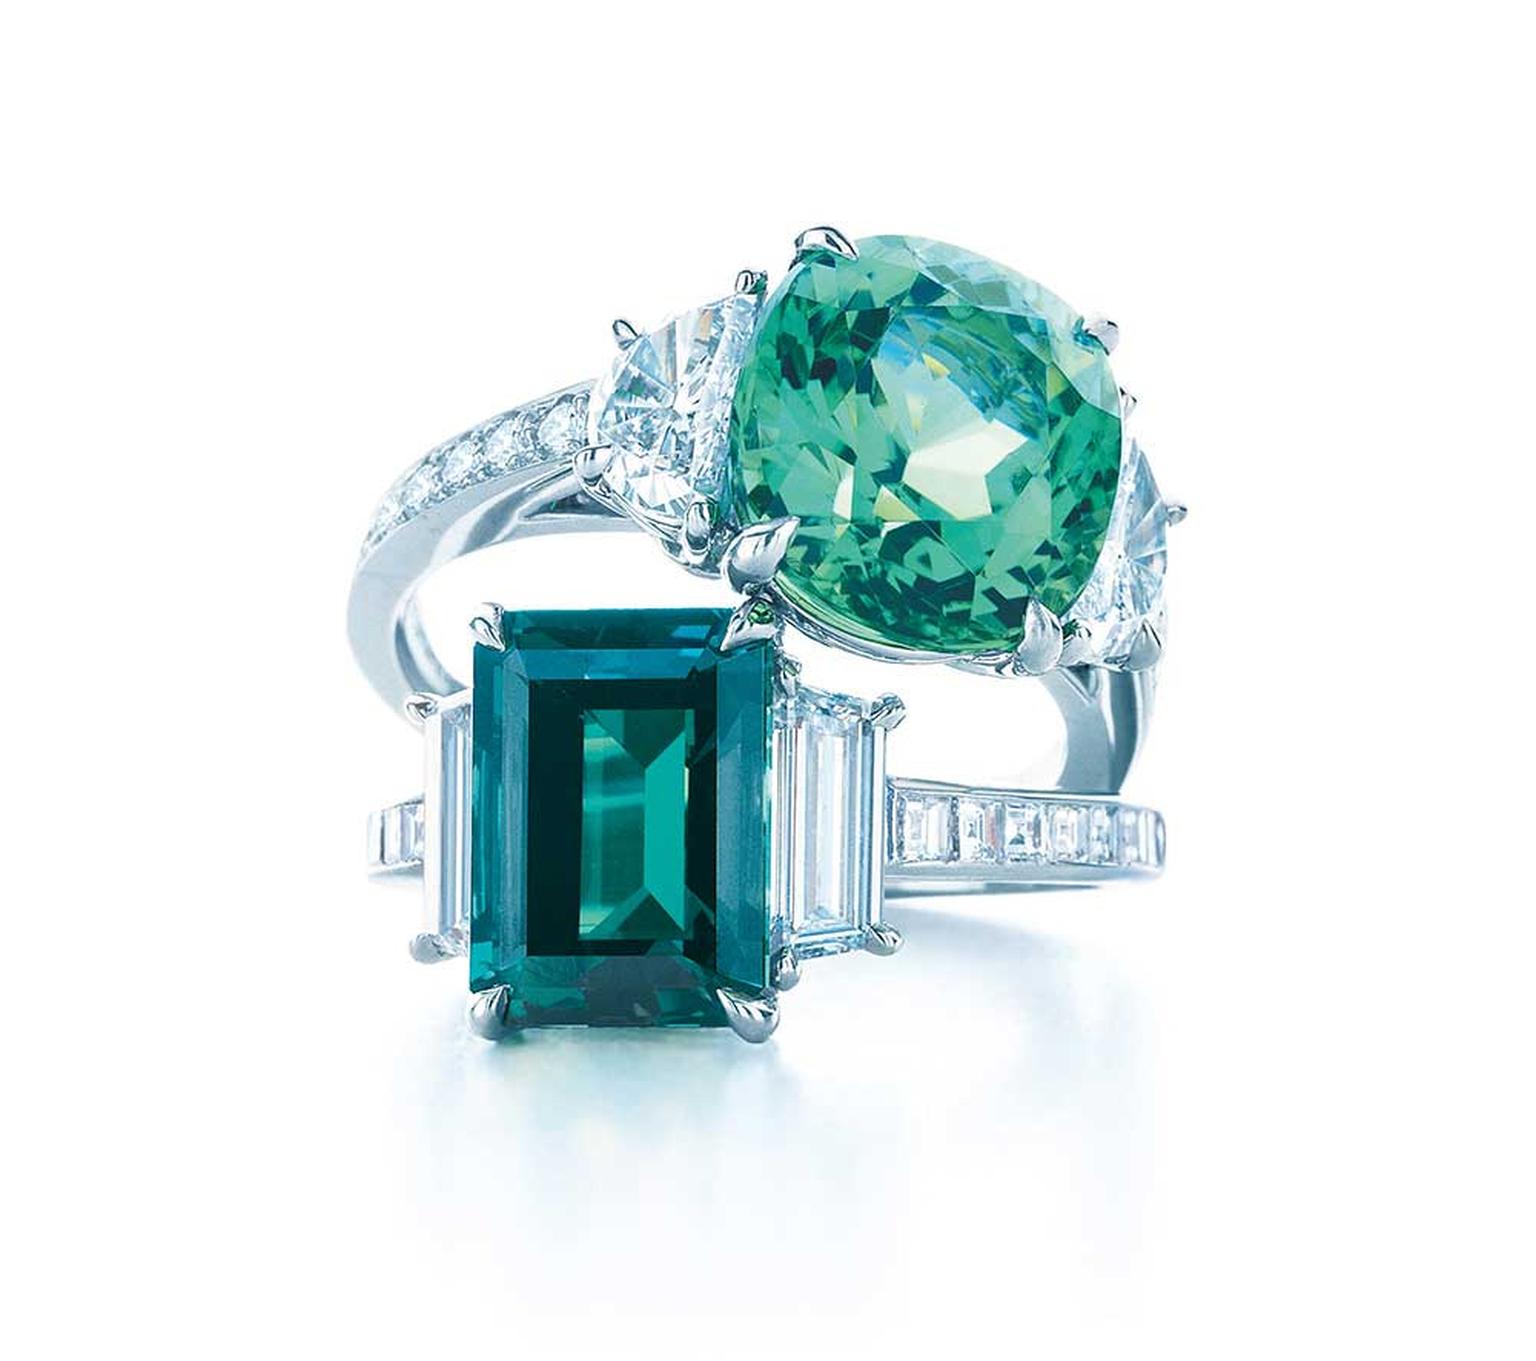 Tiffany \u0026 Co diamond and gemstone rings 